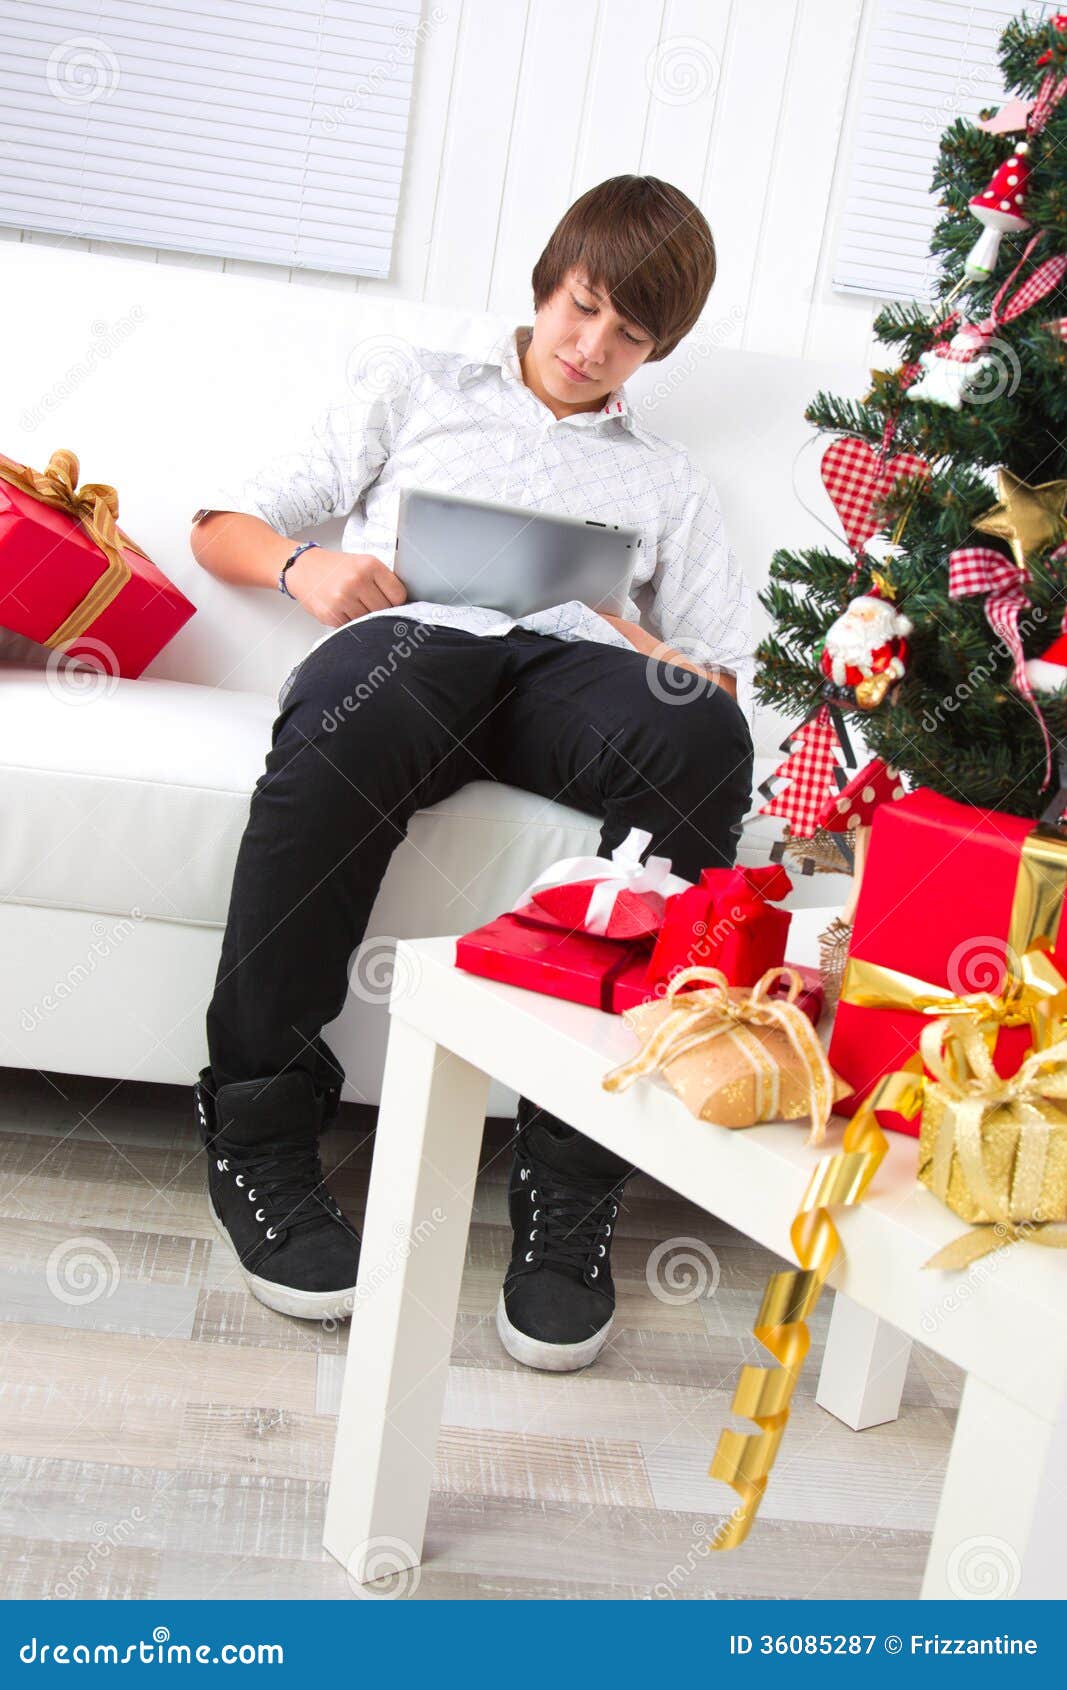 boy surfs on laptop in christmas